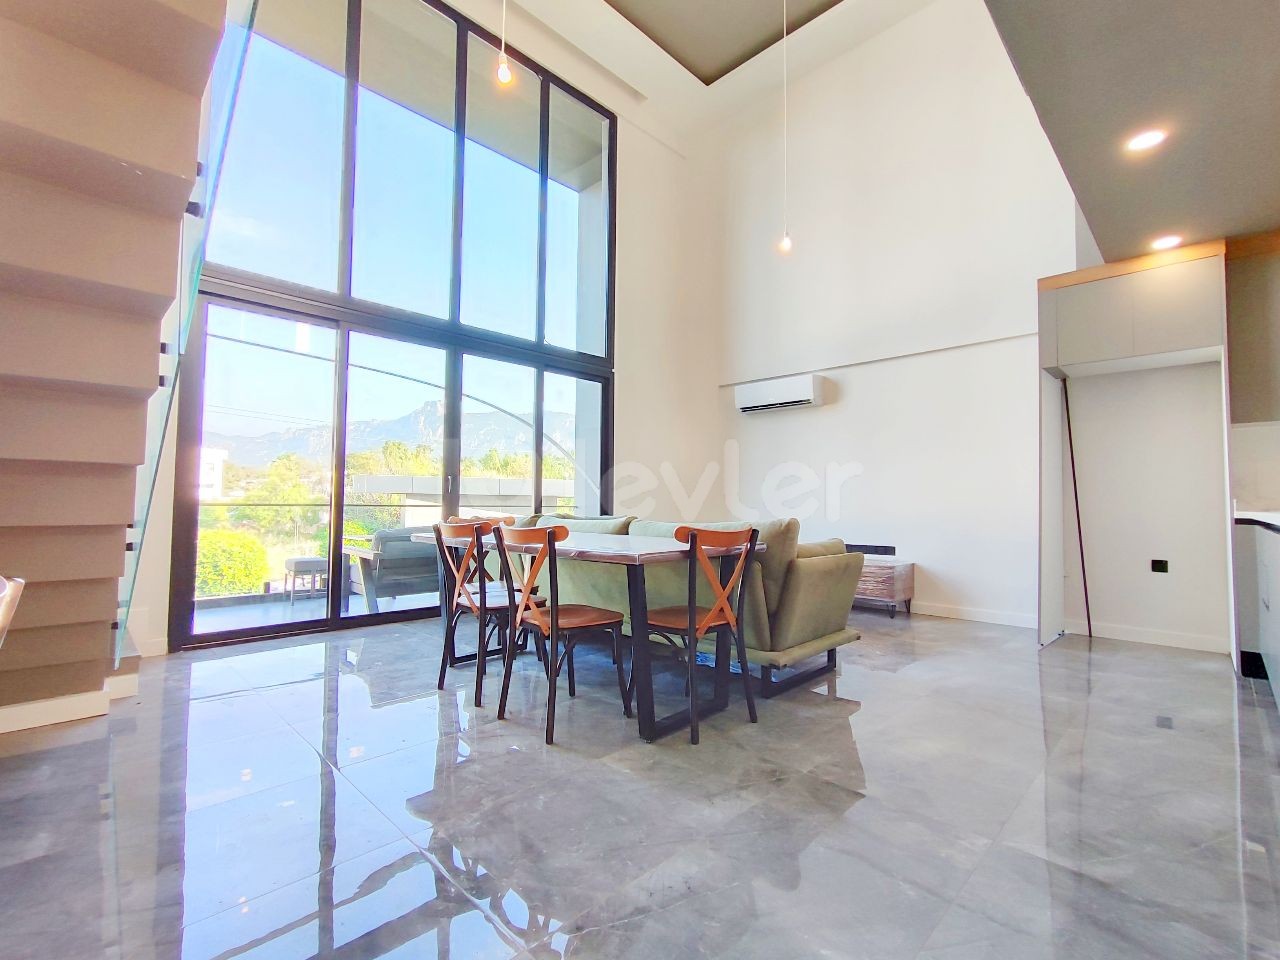 3+1 Luxury Furnished New Flat for Rent in Girne Karaoğlanoğlu